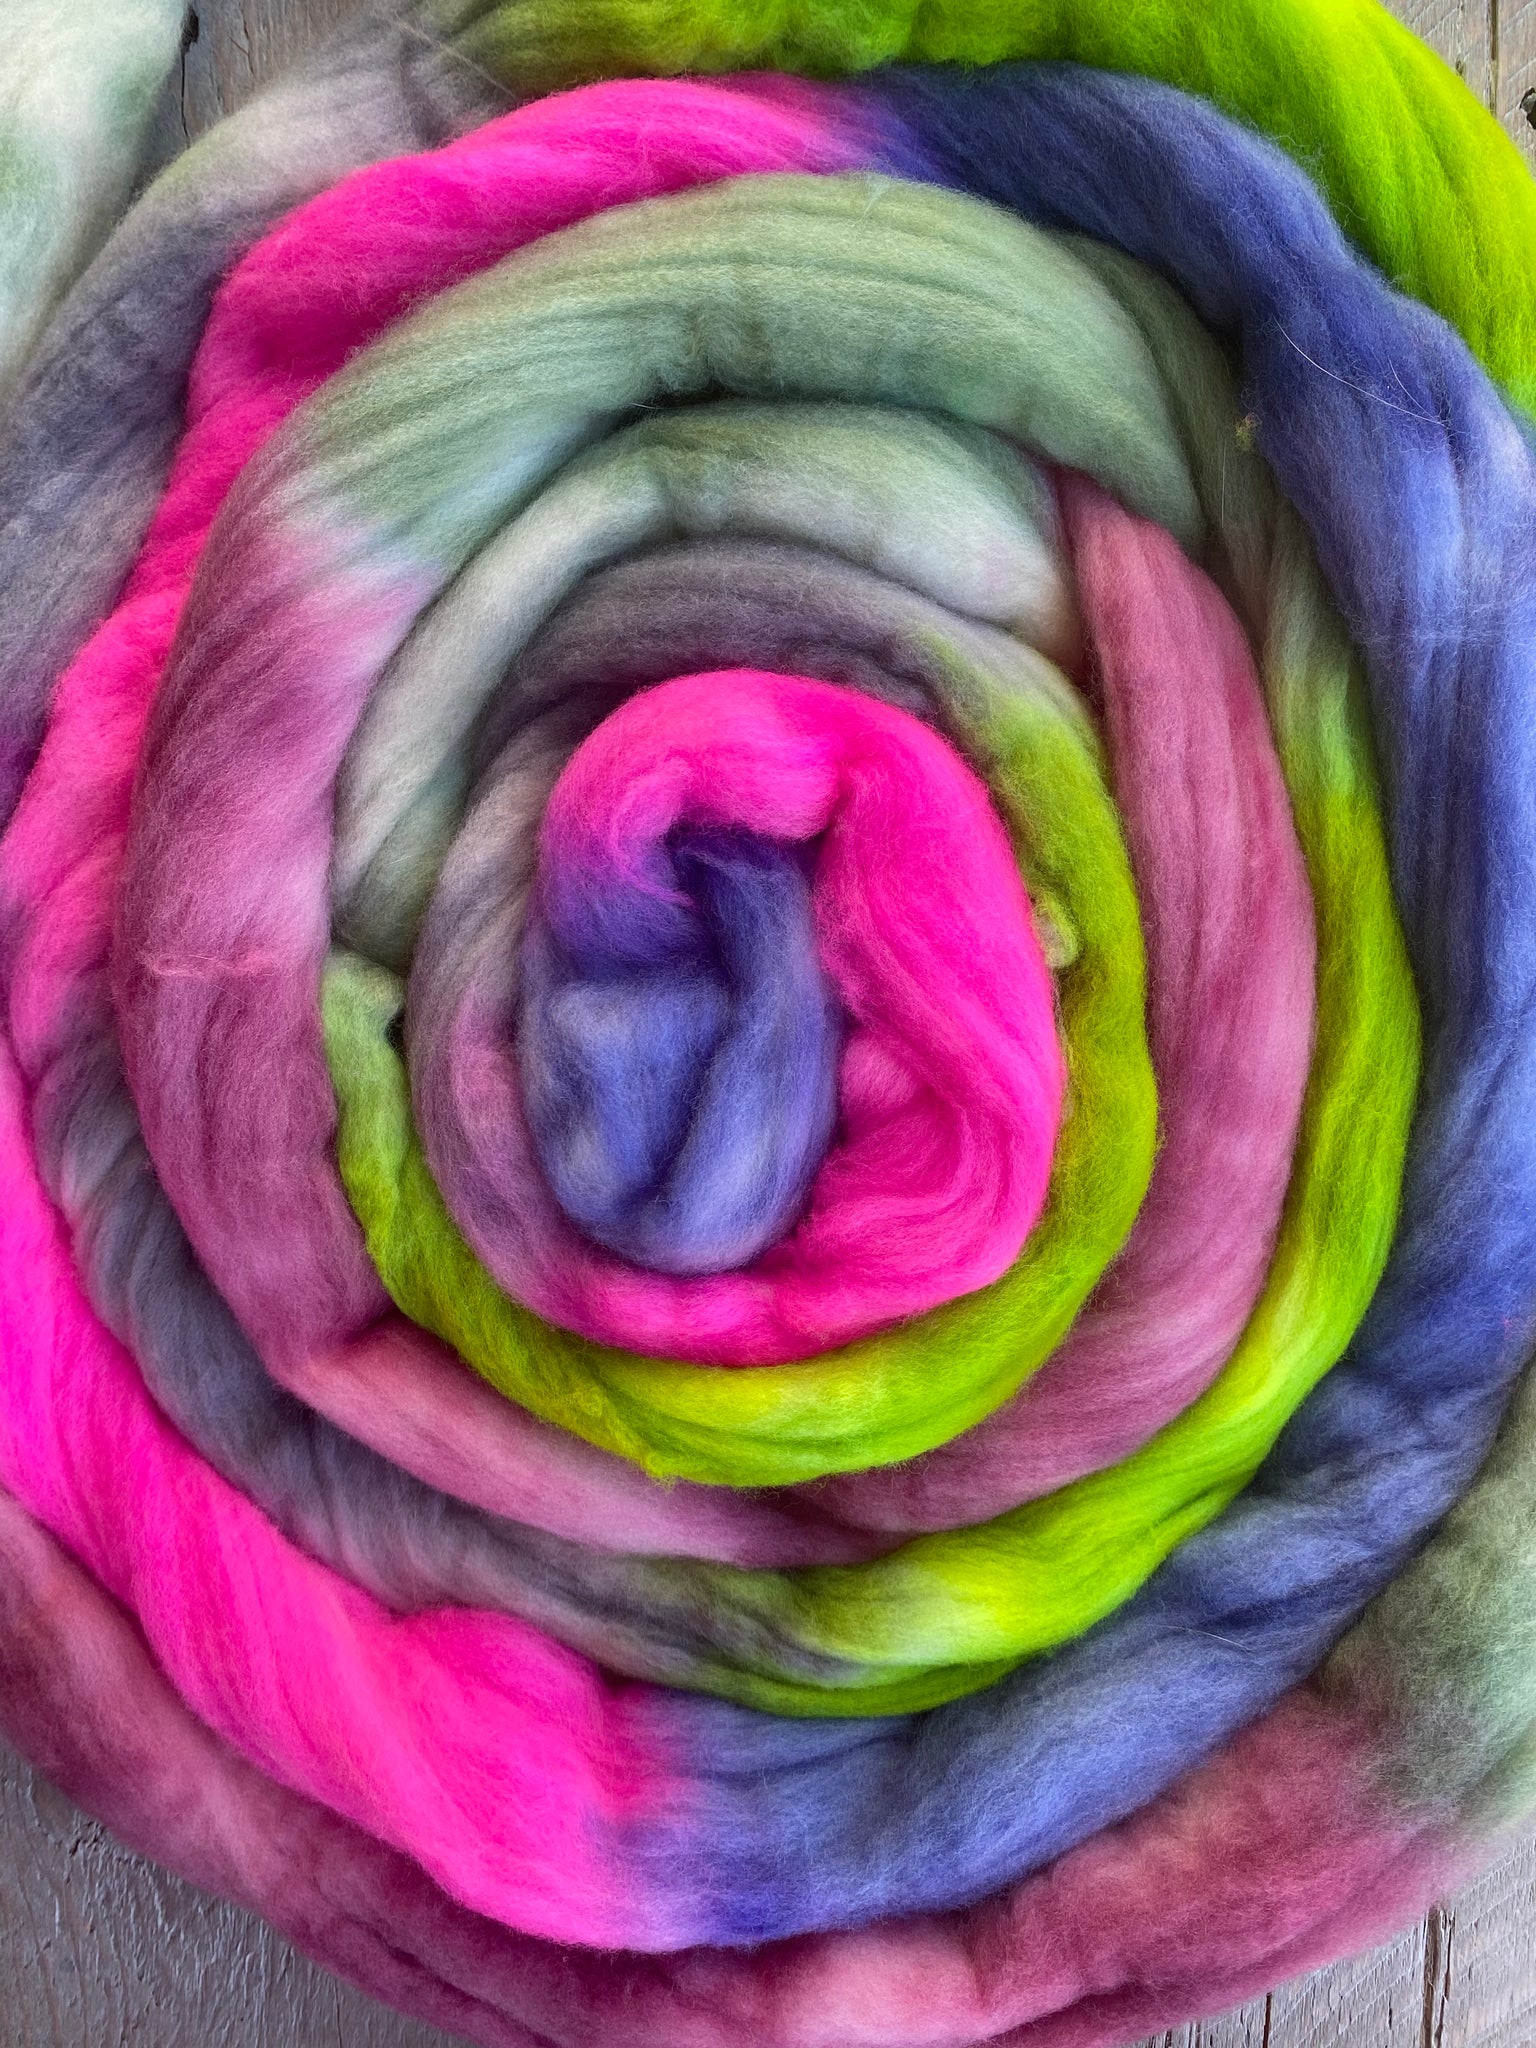 Darkle dyed Merino Wool Roving